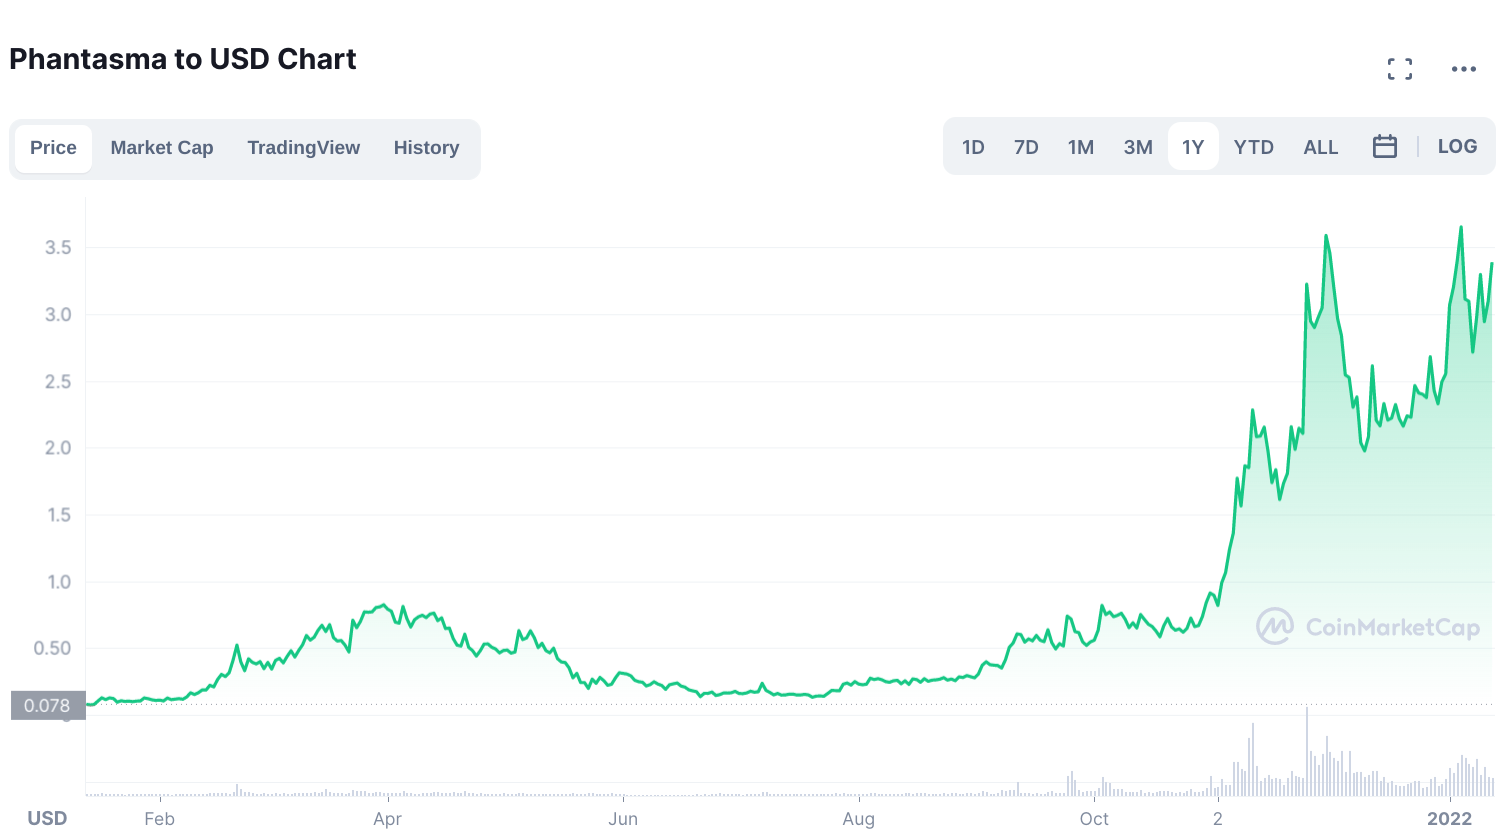 SOUL/USD chart in the past year - Phantasma crypto